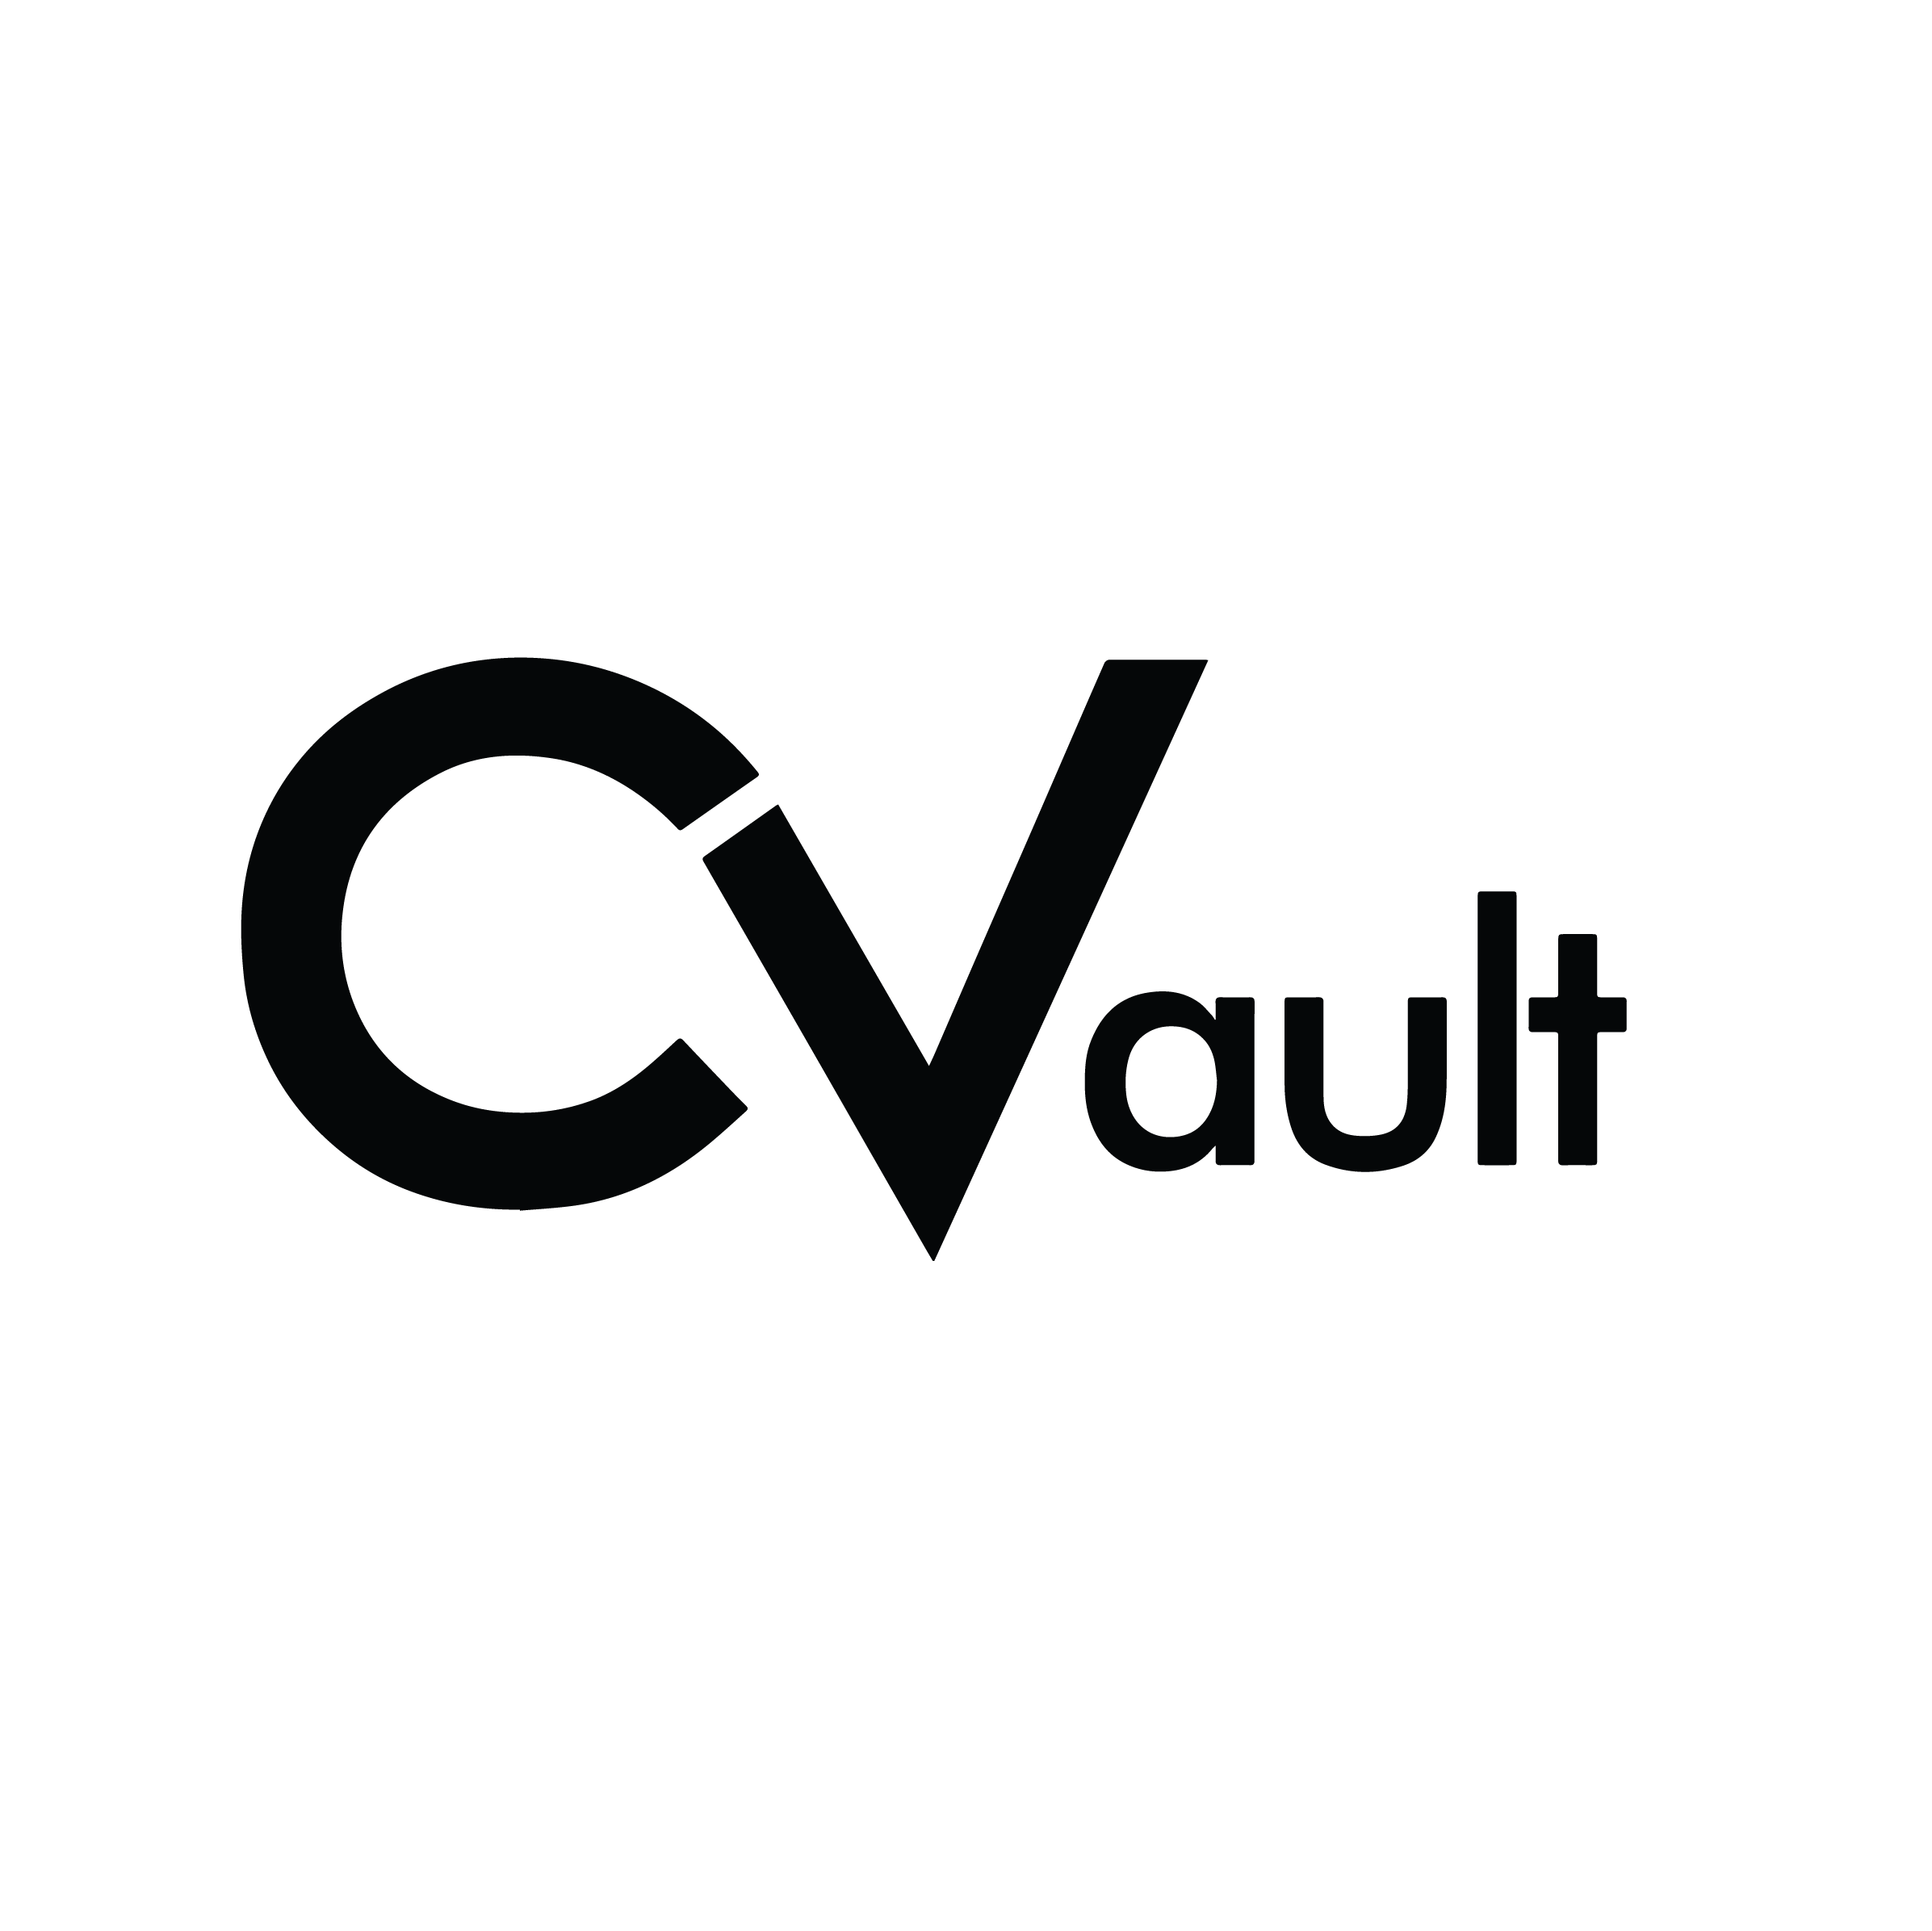 cVault